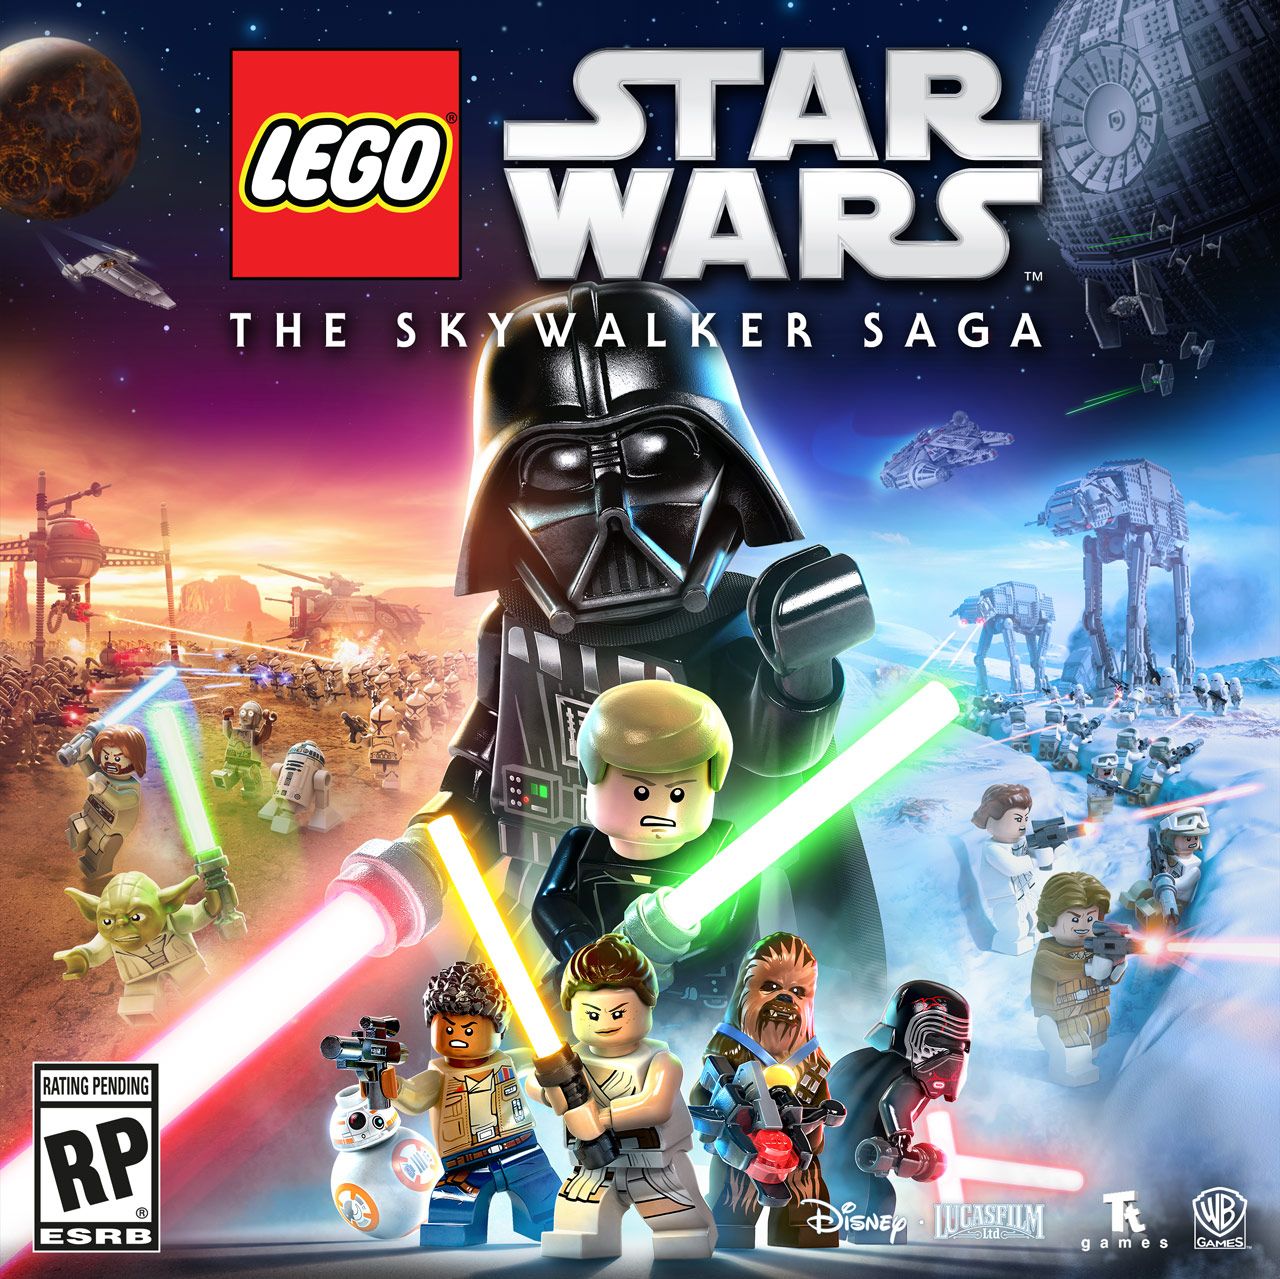 LEGO STAR WARS: THE SKYWALKER SAGA Key Art Revealed Along With New